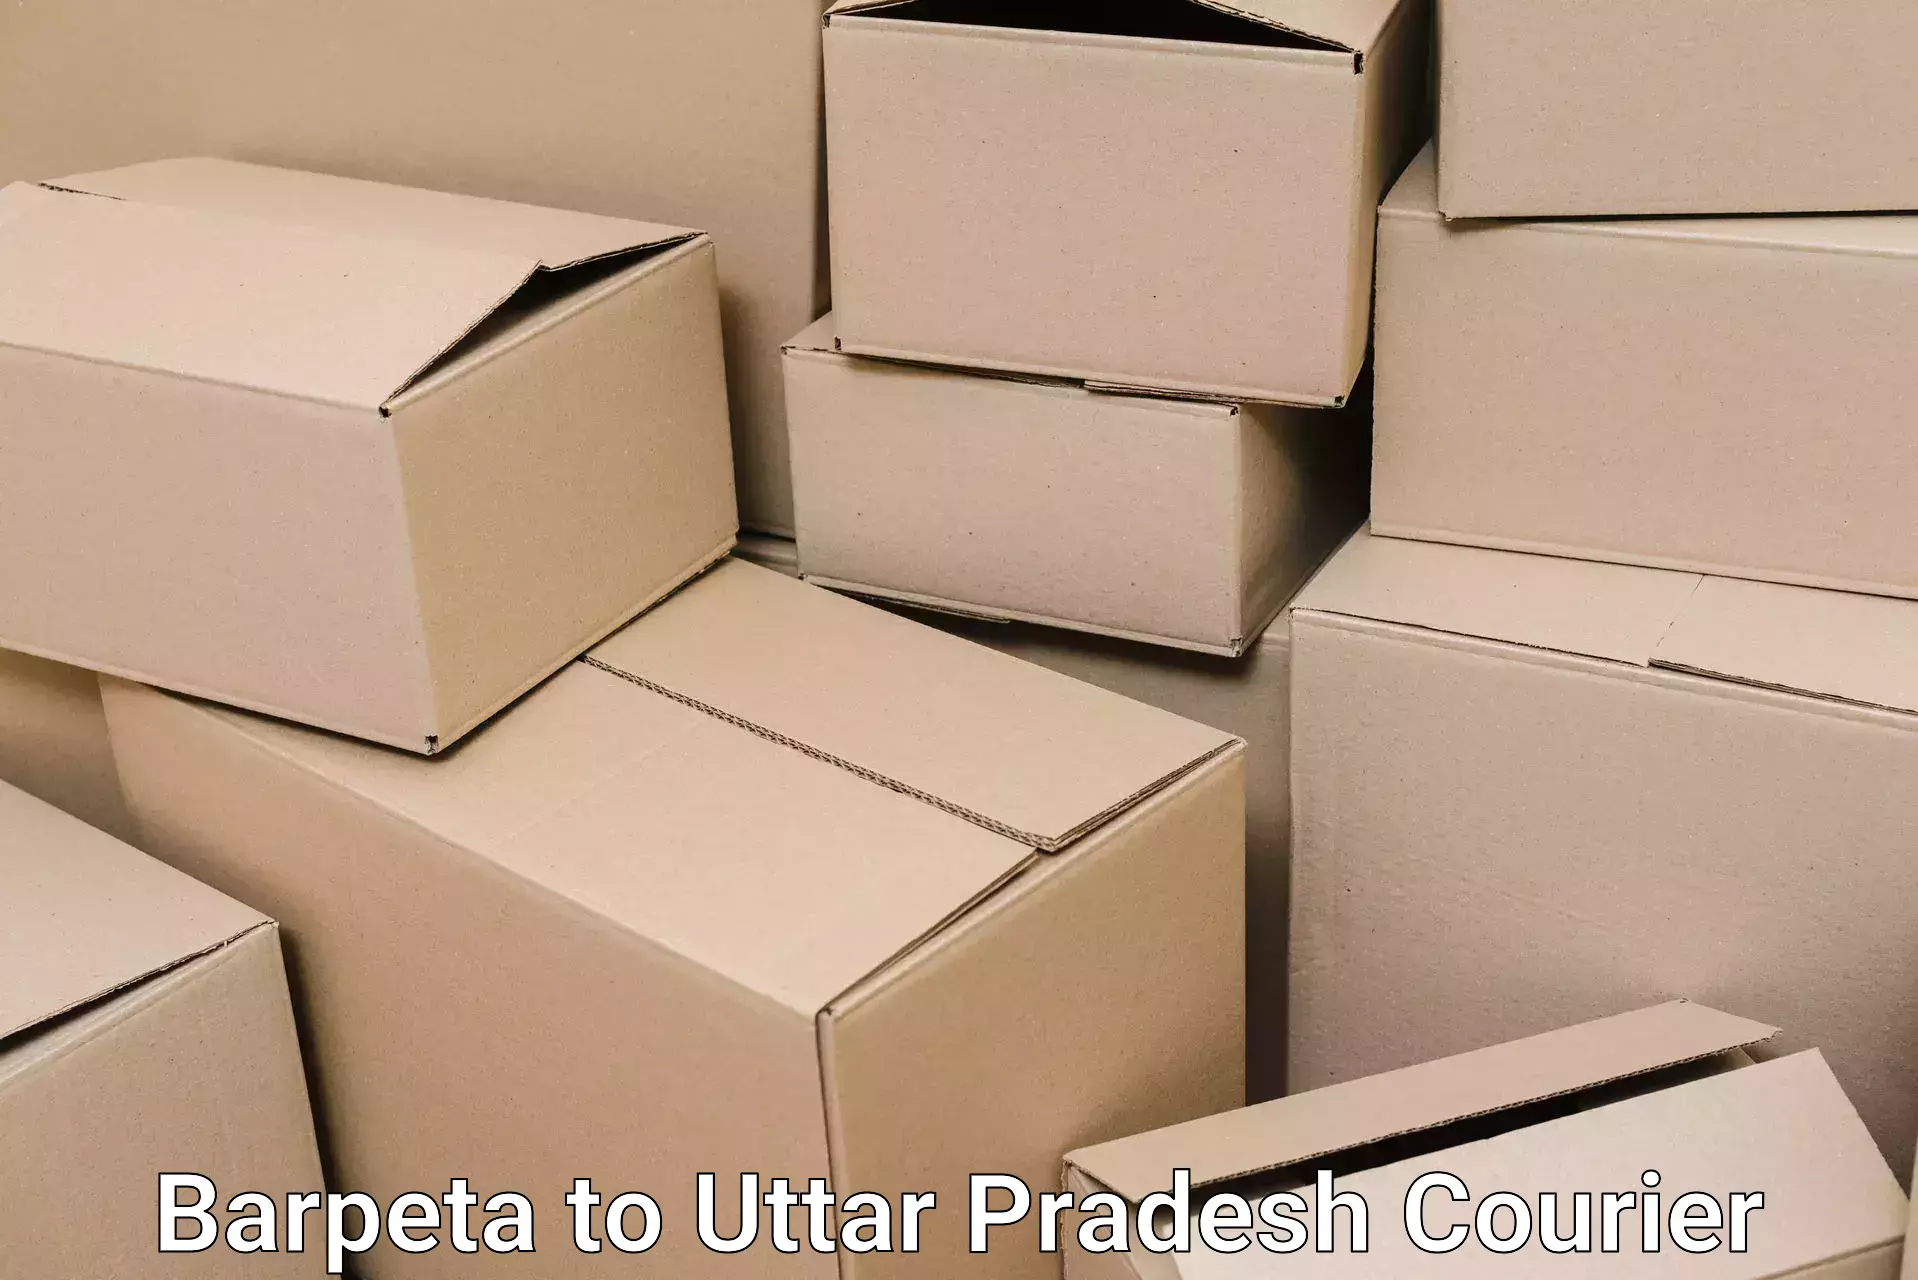 Quality moving and storage in Barpeta to Uttar Pradesh